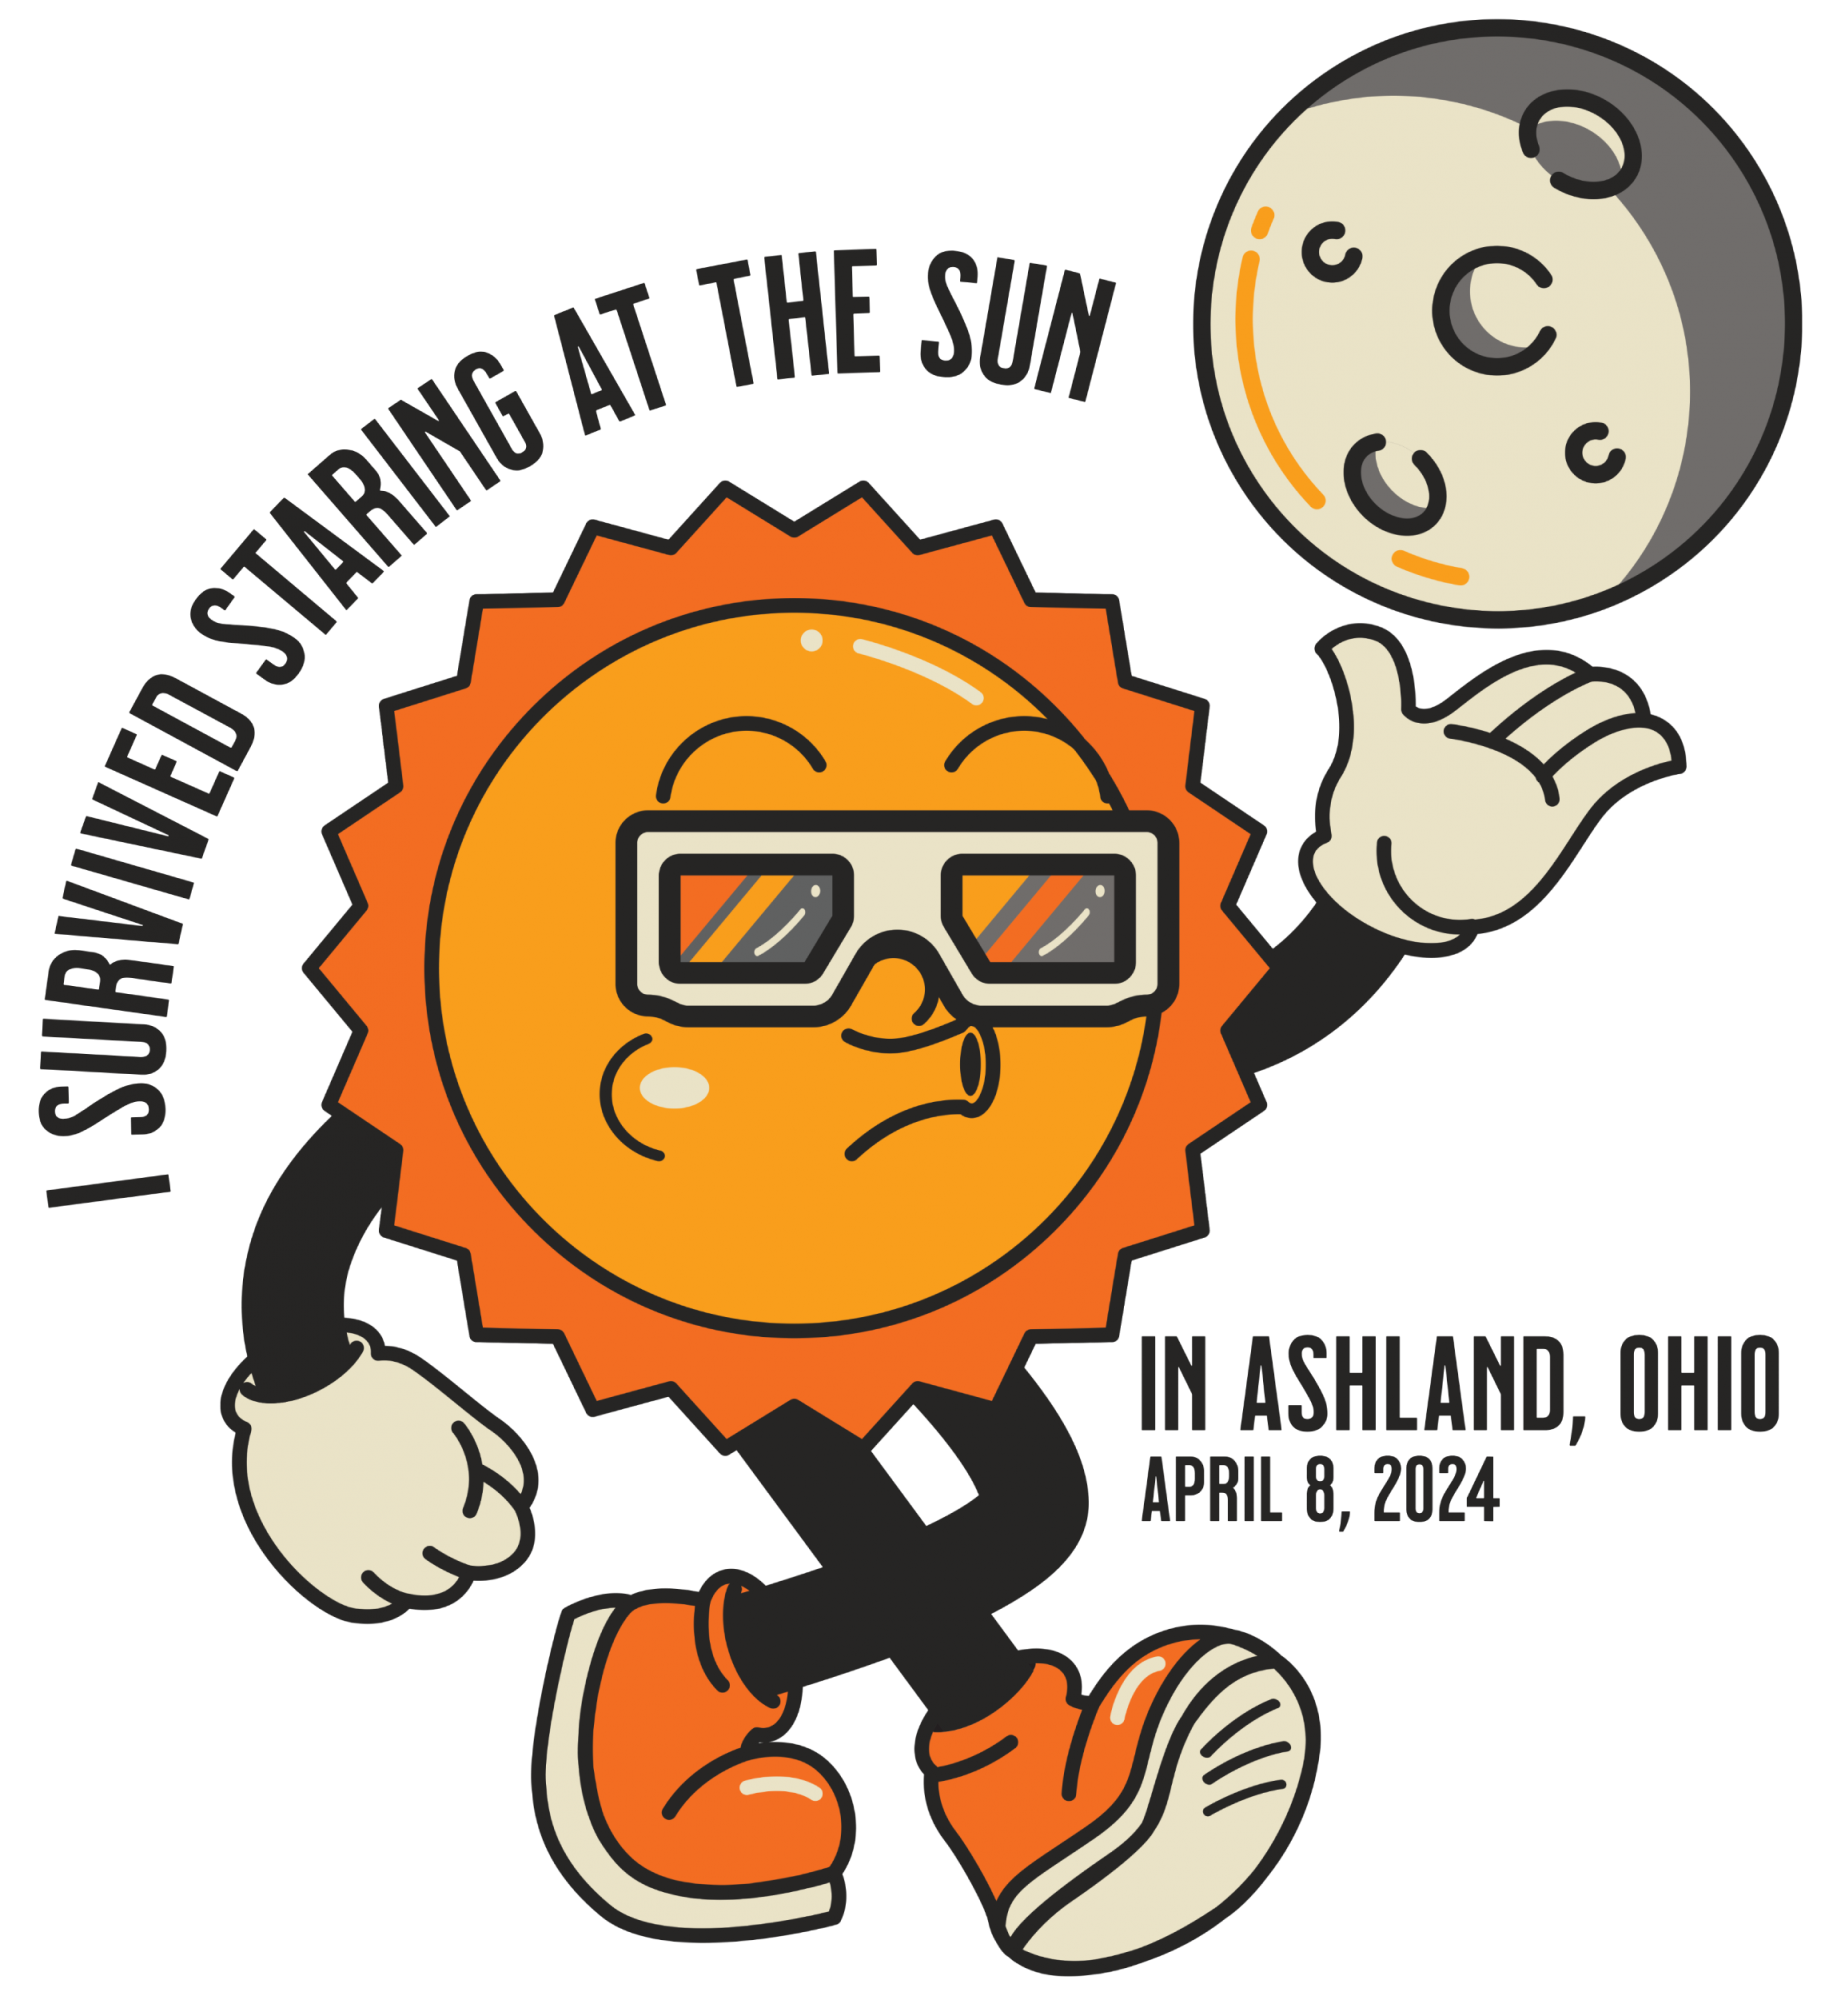 ashland ohio solar eclipse experience